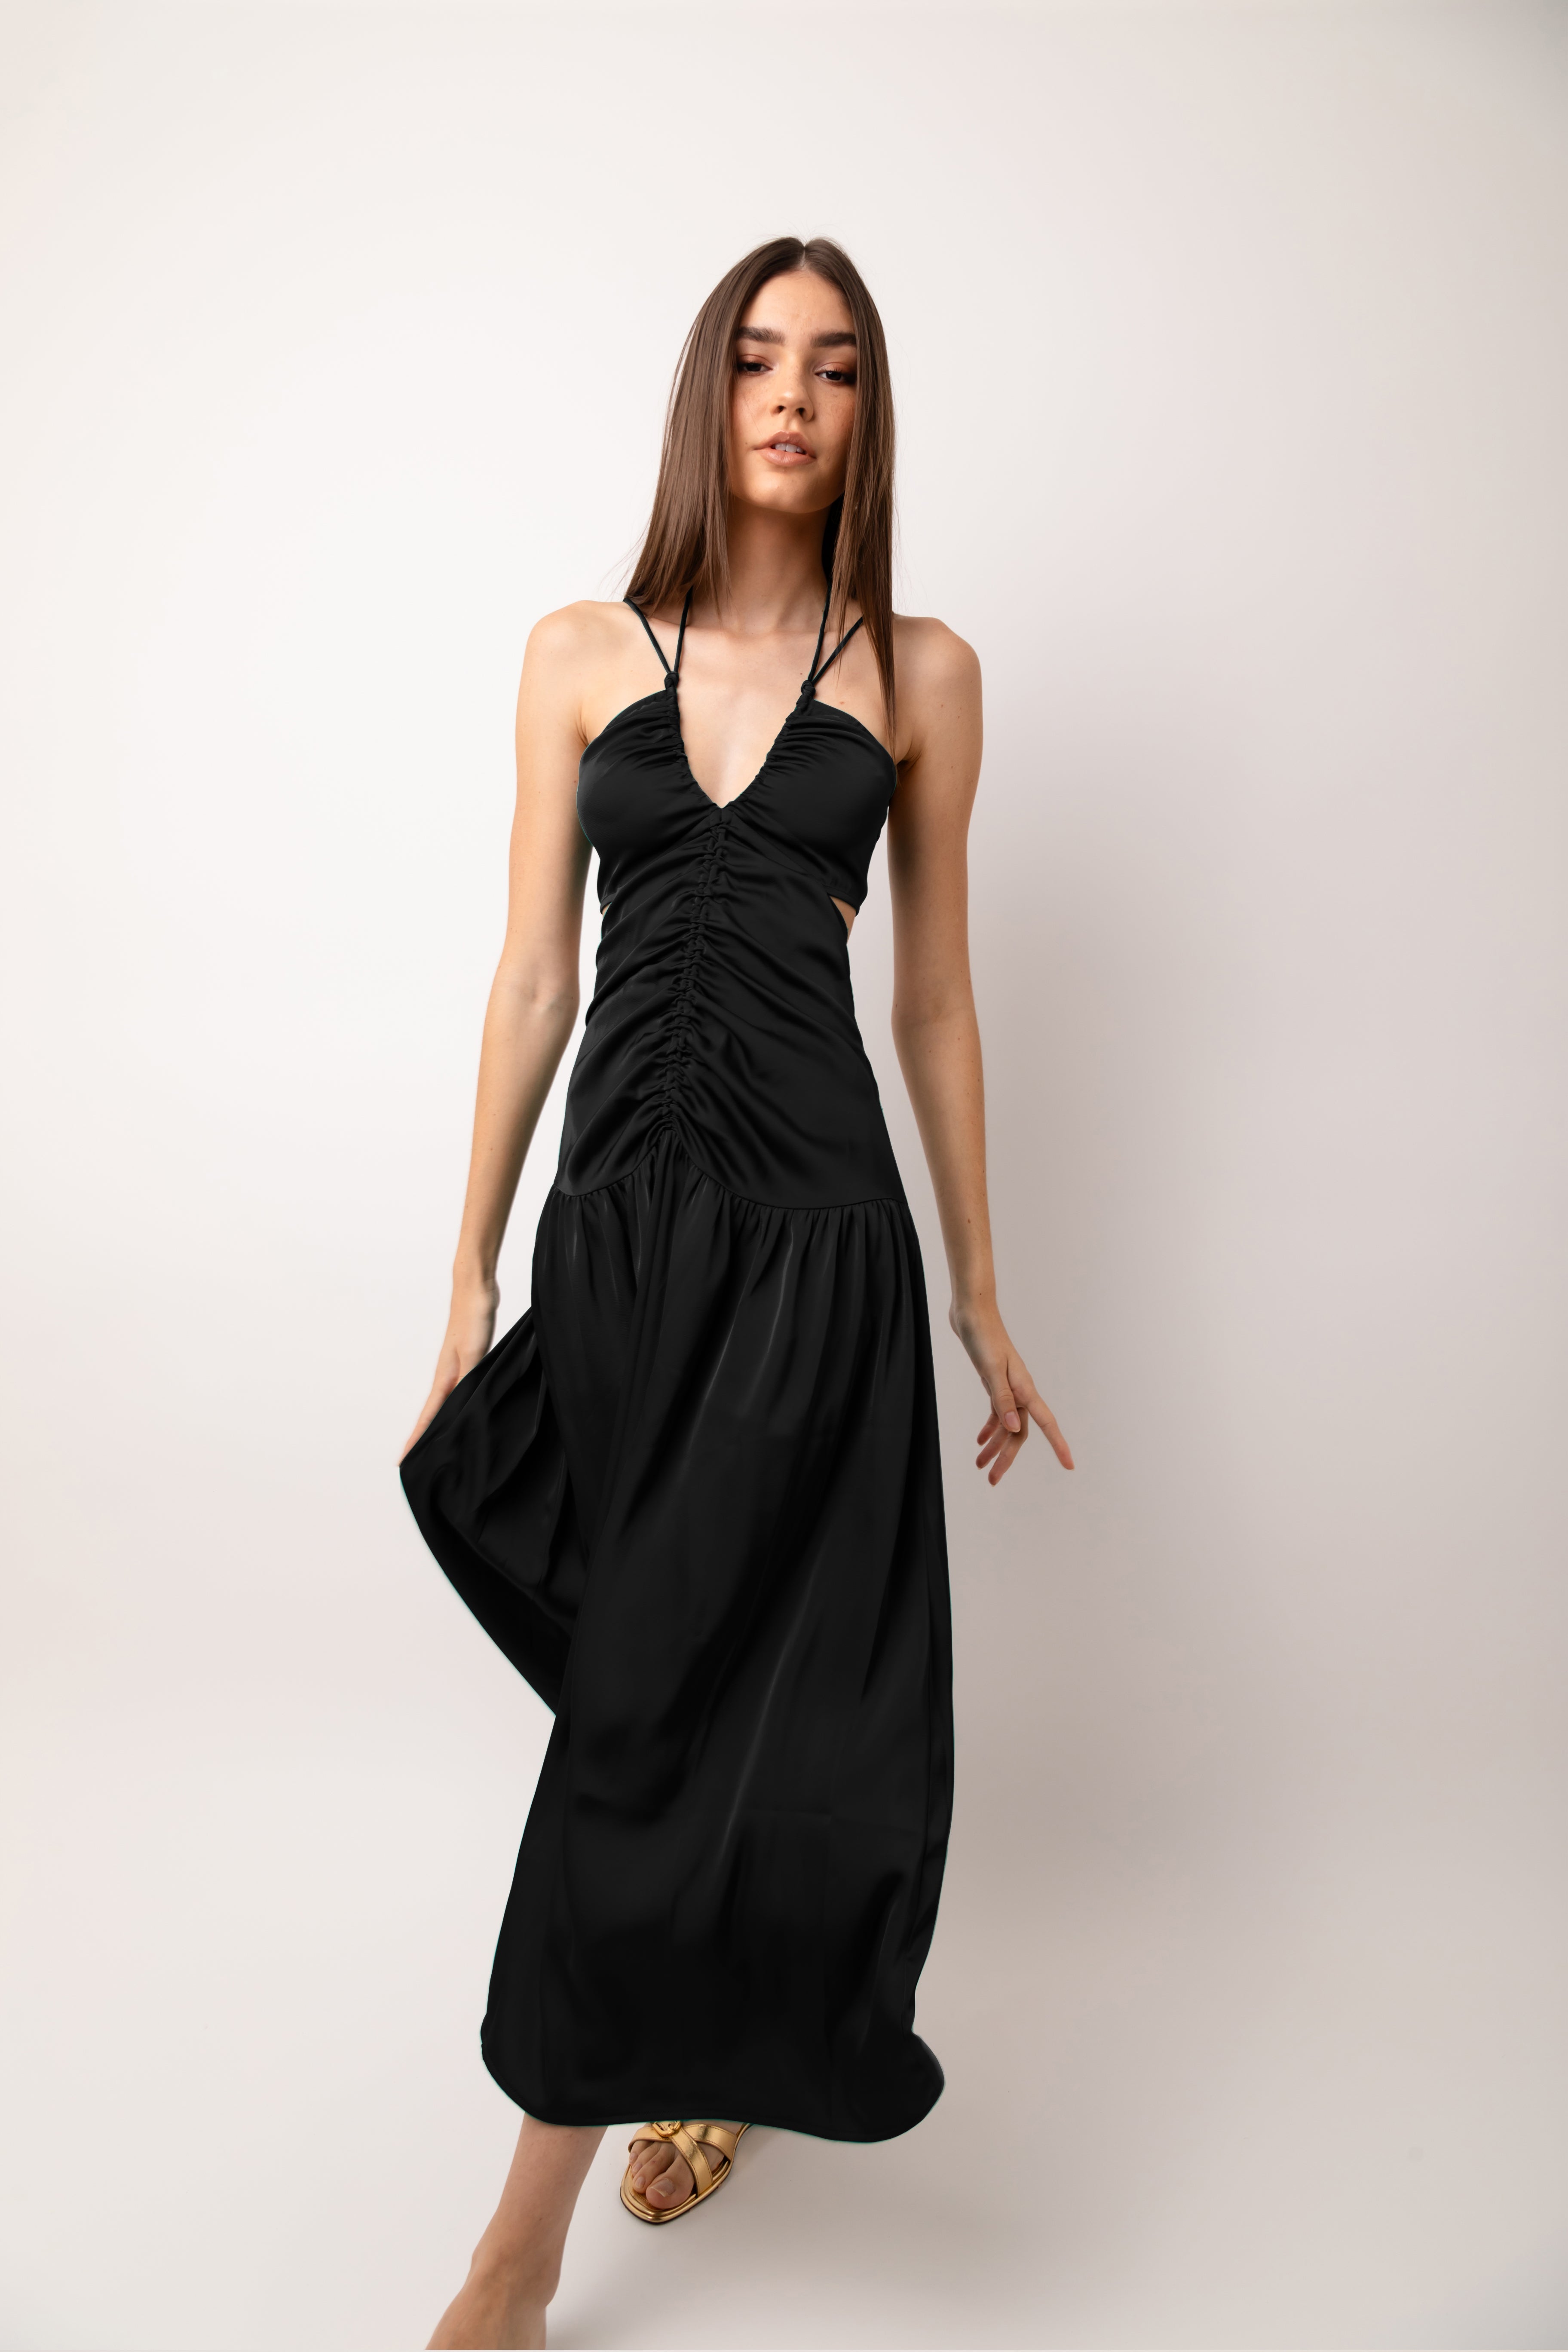 Freya Black Satin Ruched Midi Dress